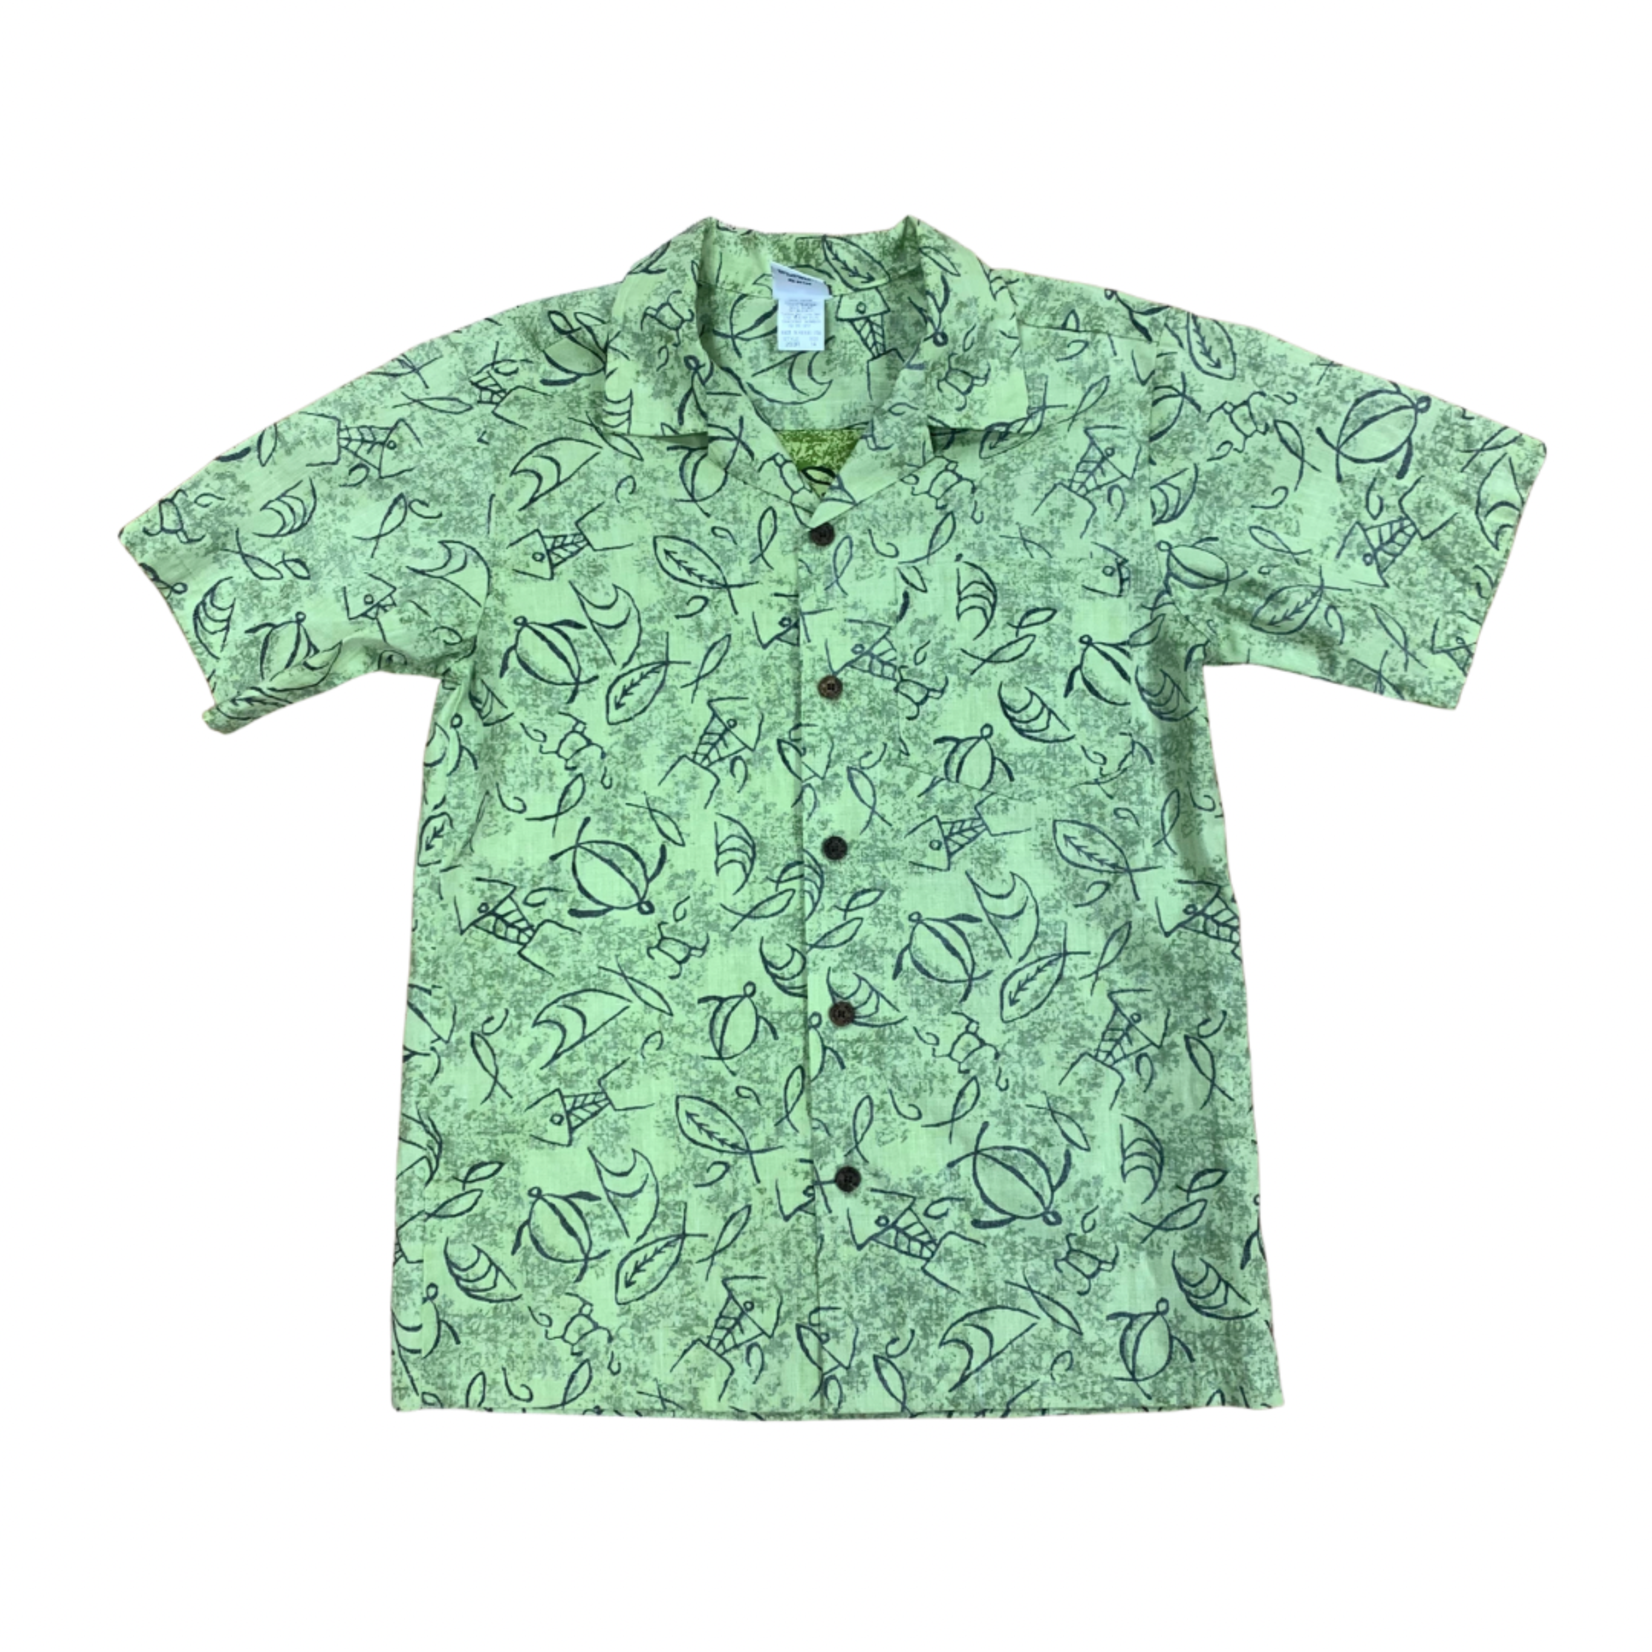 Mission Zero Youth Vintage Aloha Shirt - Casual Nui Nalu - Green Hawaiian Petroglyph Print  - 14Y